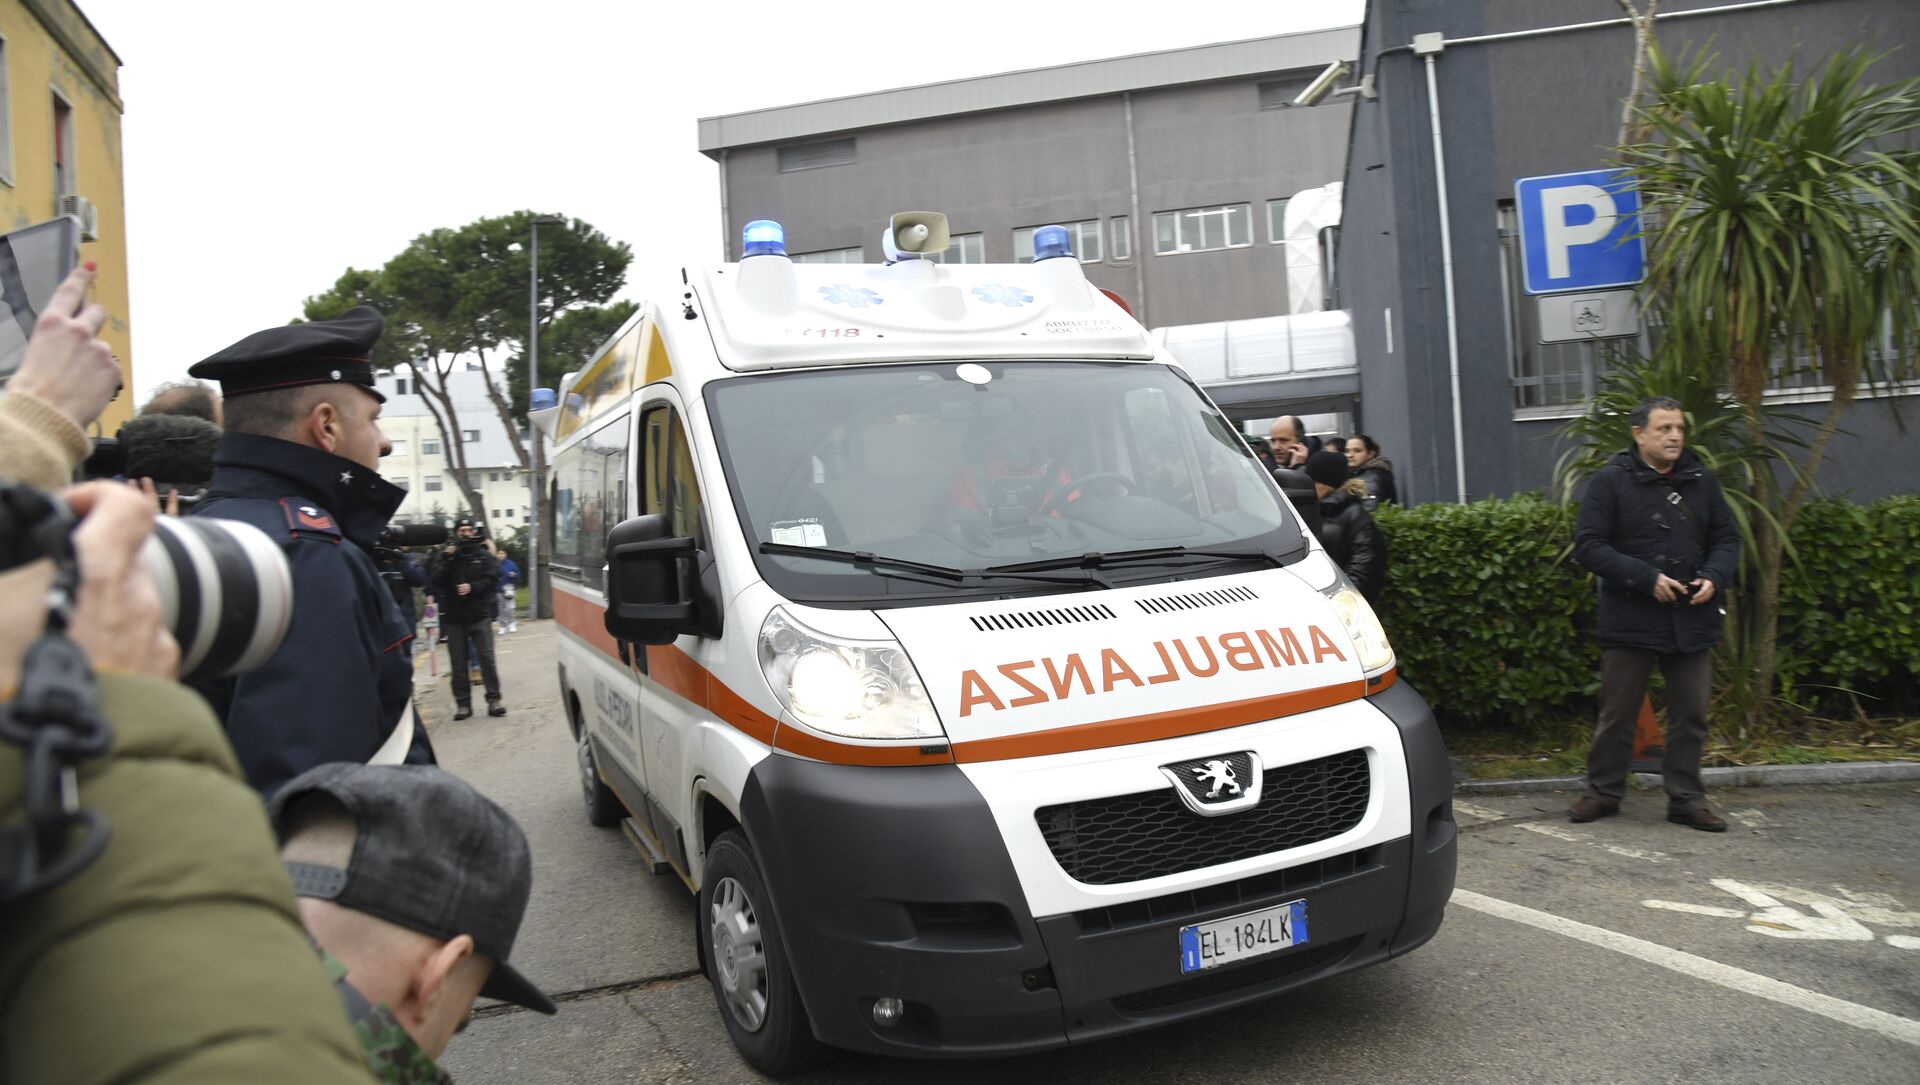 Ambulance Italy. Ambulance arrive